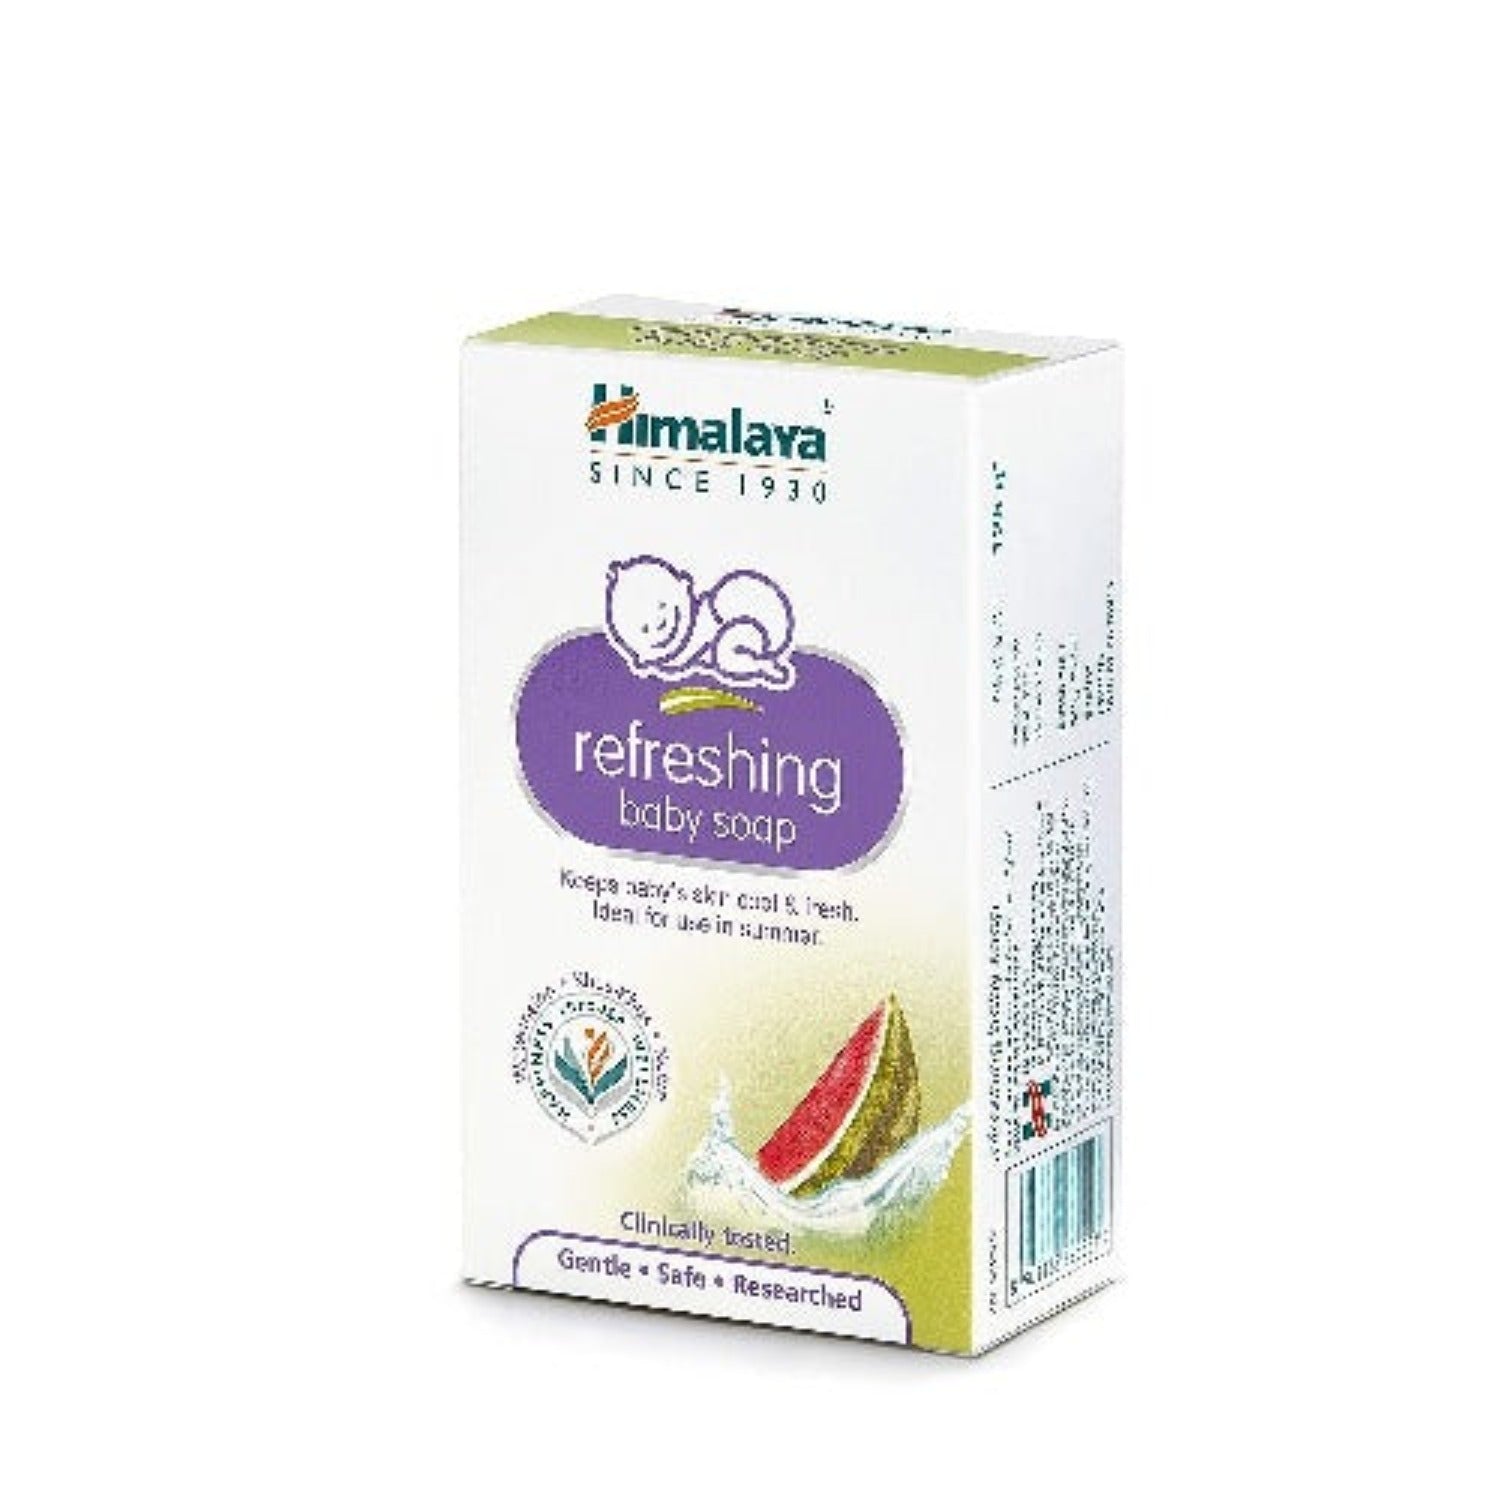 Himalaya Herbal Ayurvedic Refreshing Baby Care Soap Keeps Baby's Skin Cool And Fresh Soap